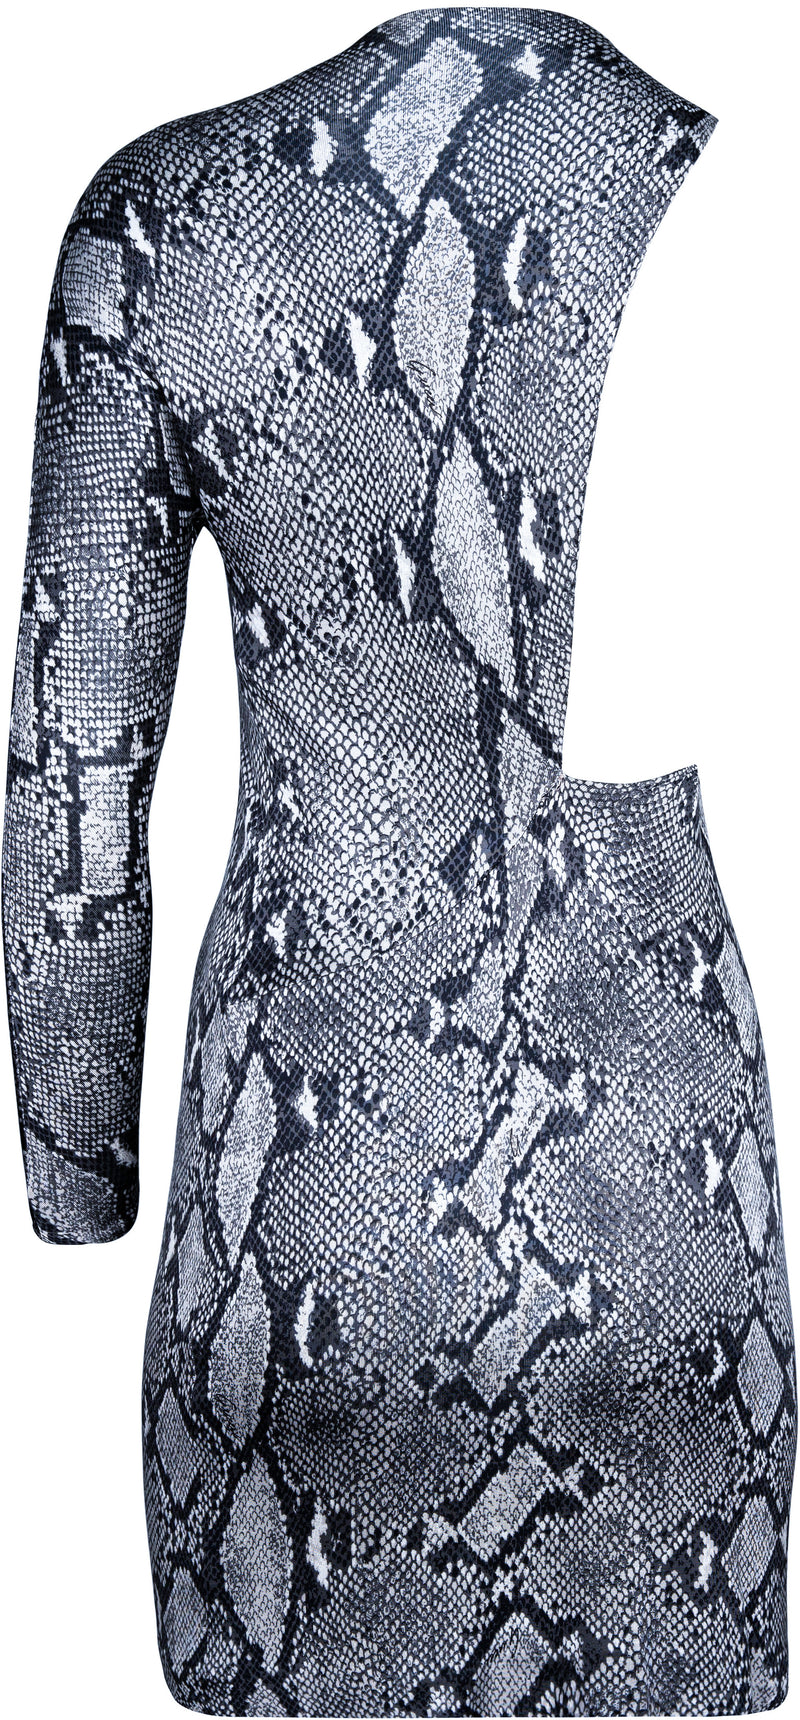 Gucci Spring 2000 Printed One-Shoulder Dress